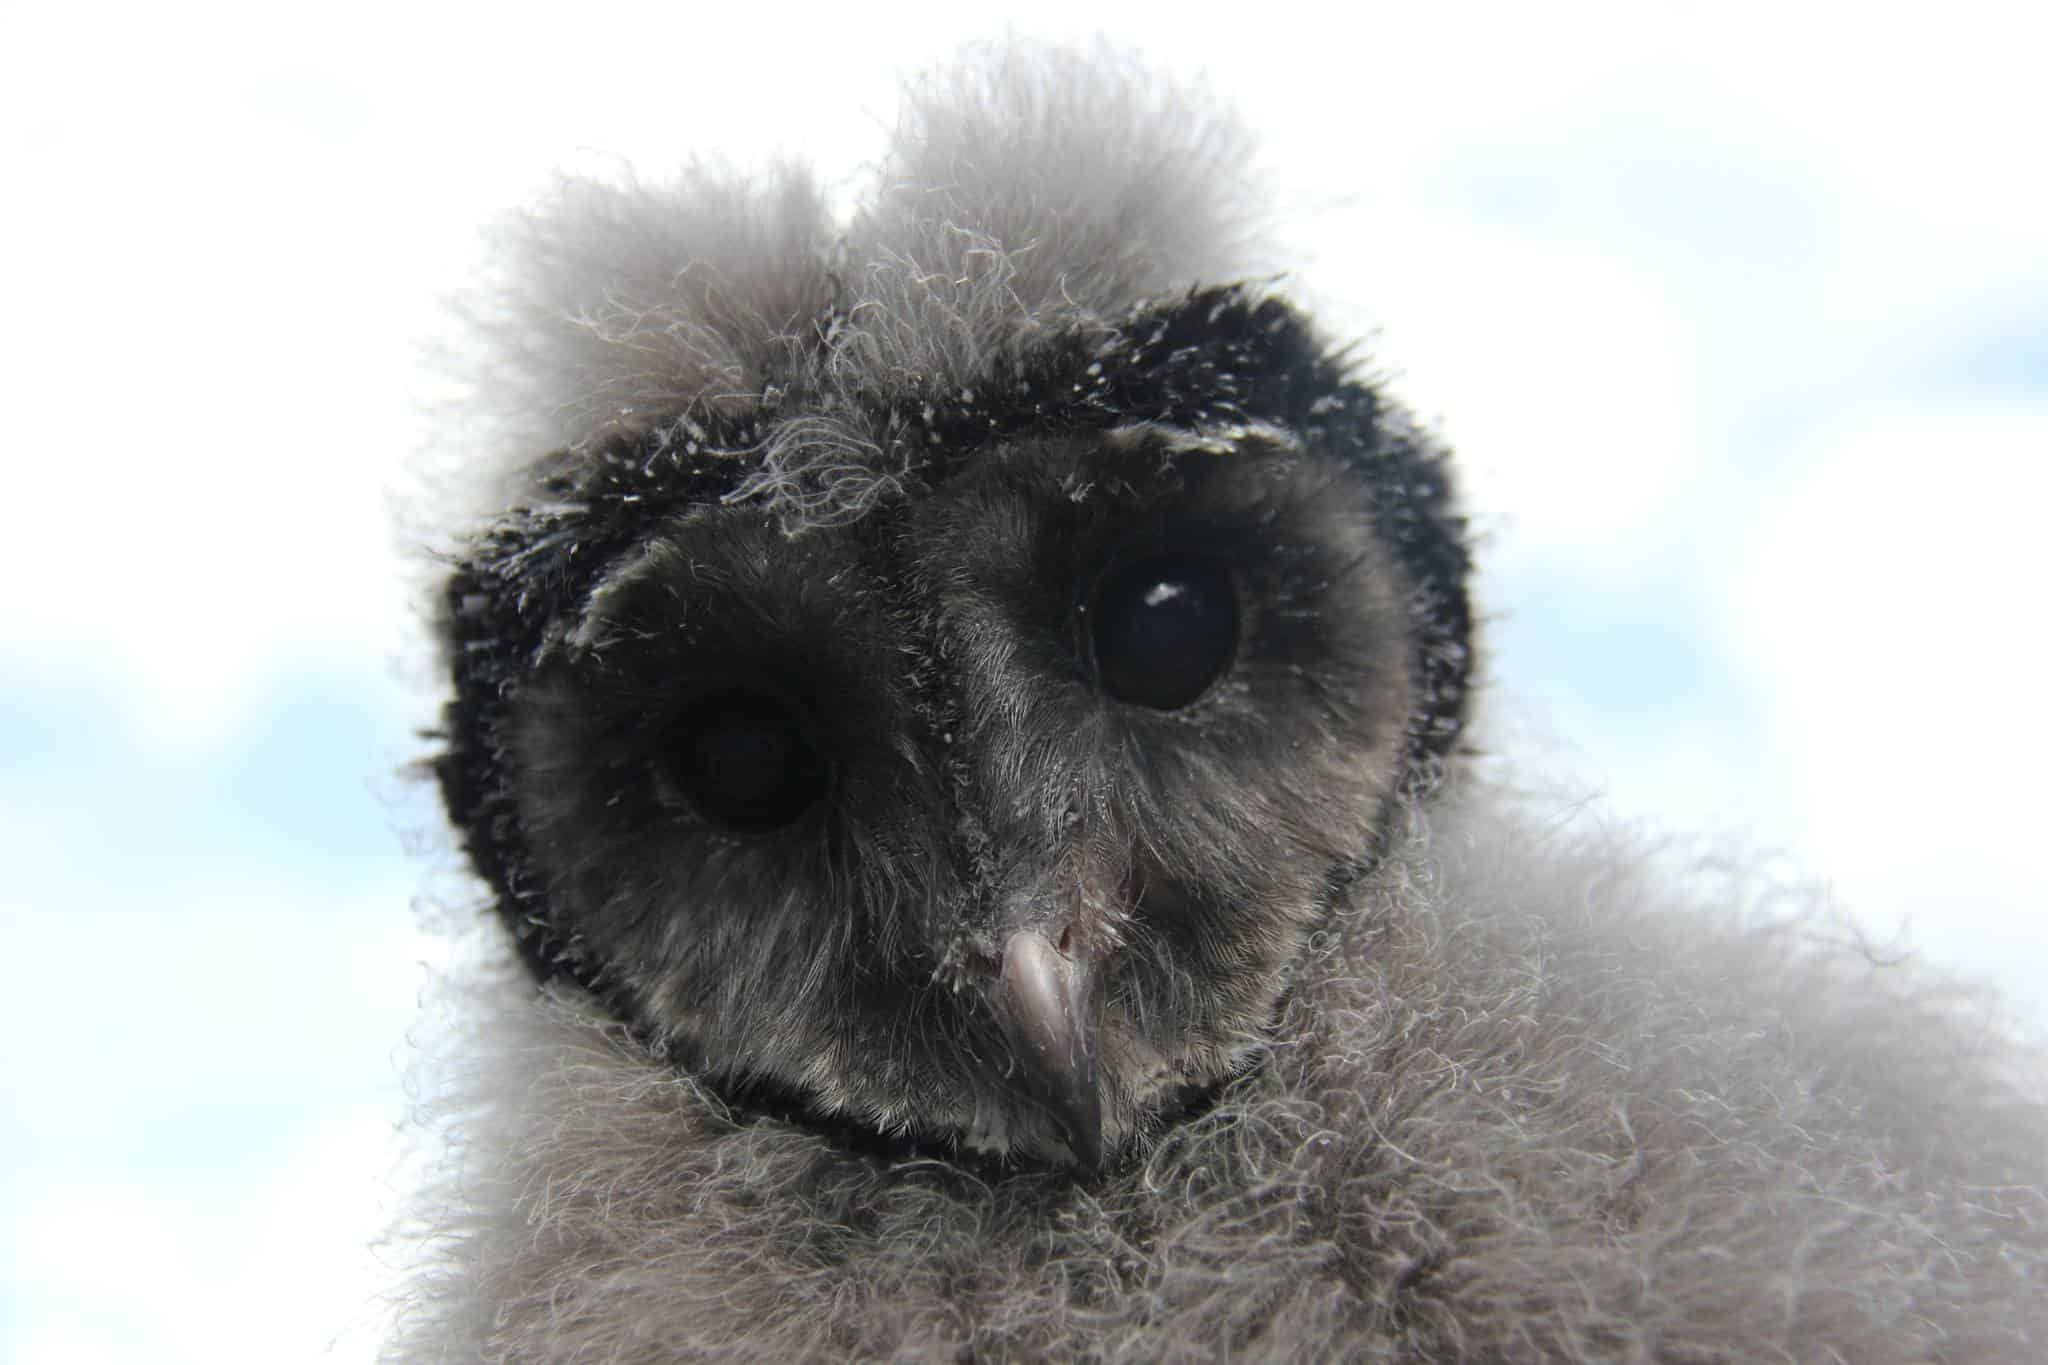 Sooty owl